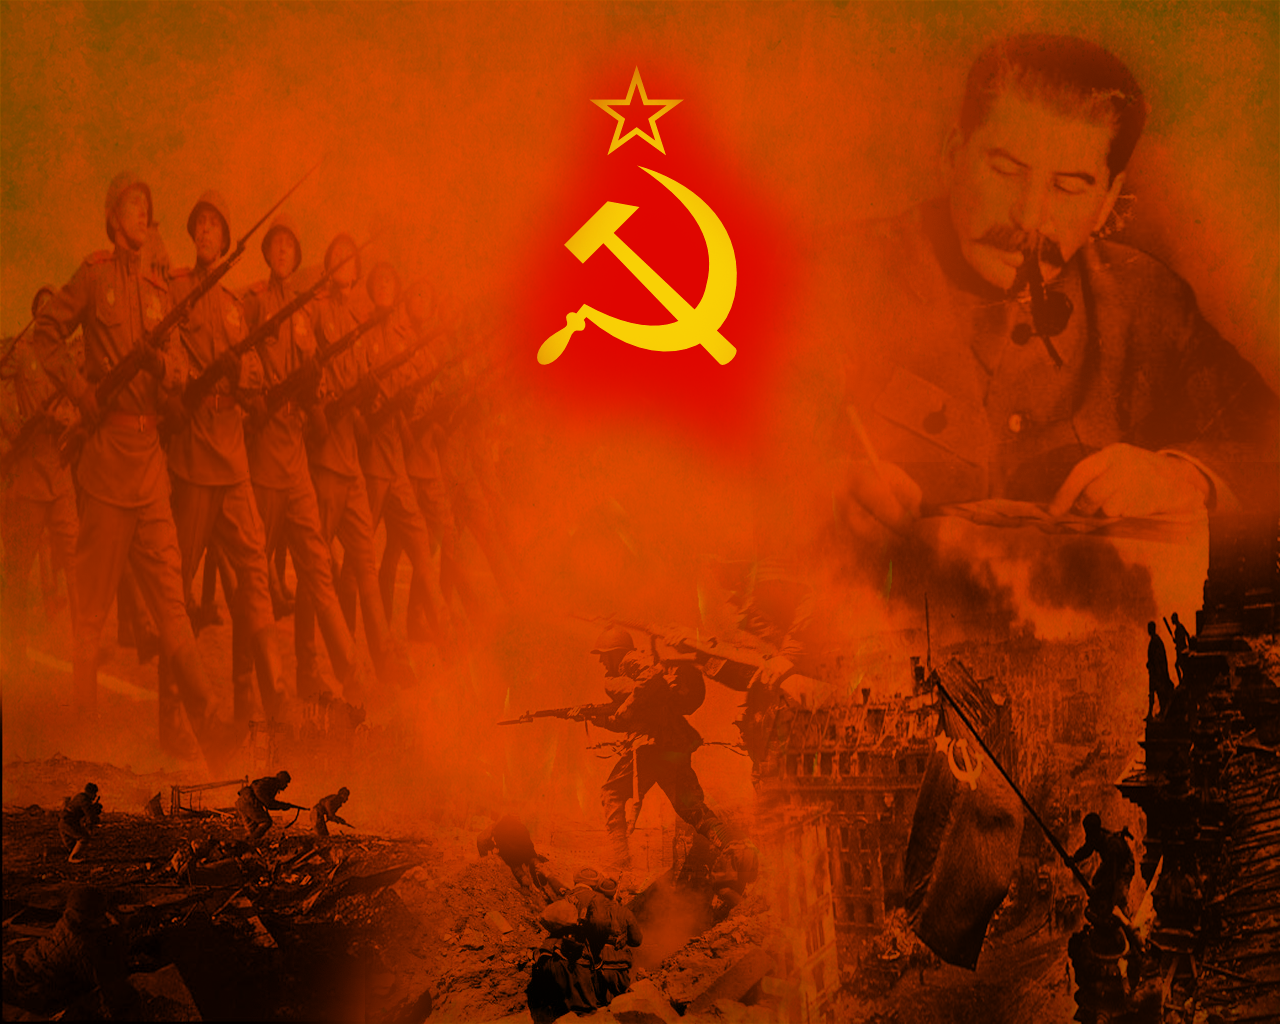 Soviet Union Wallpaper Wwii Ussr4 Years Ago In People